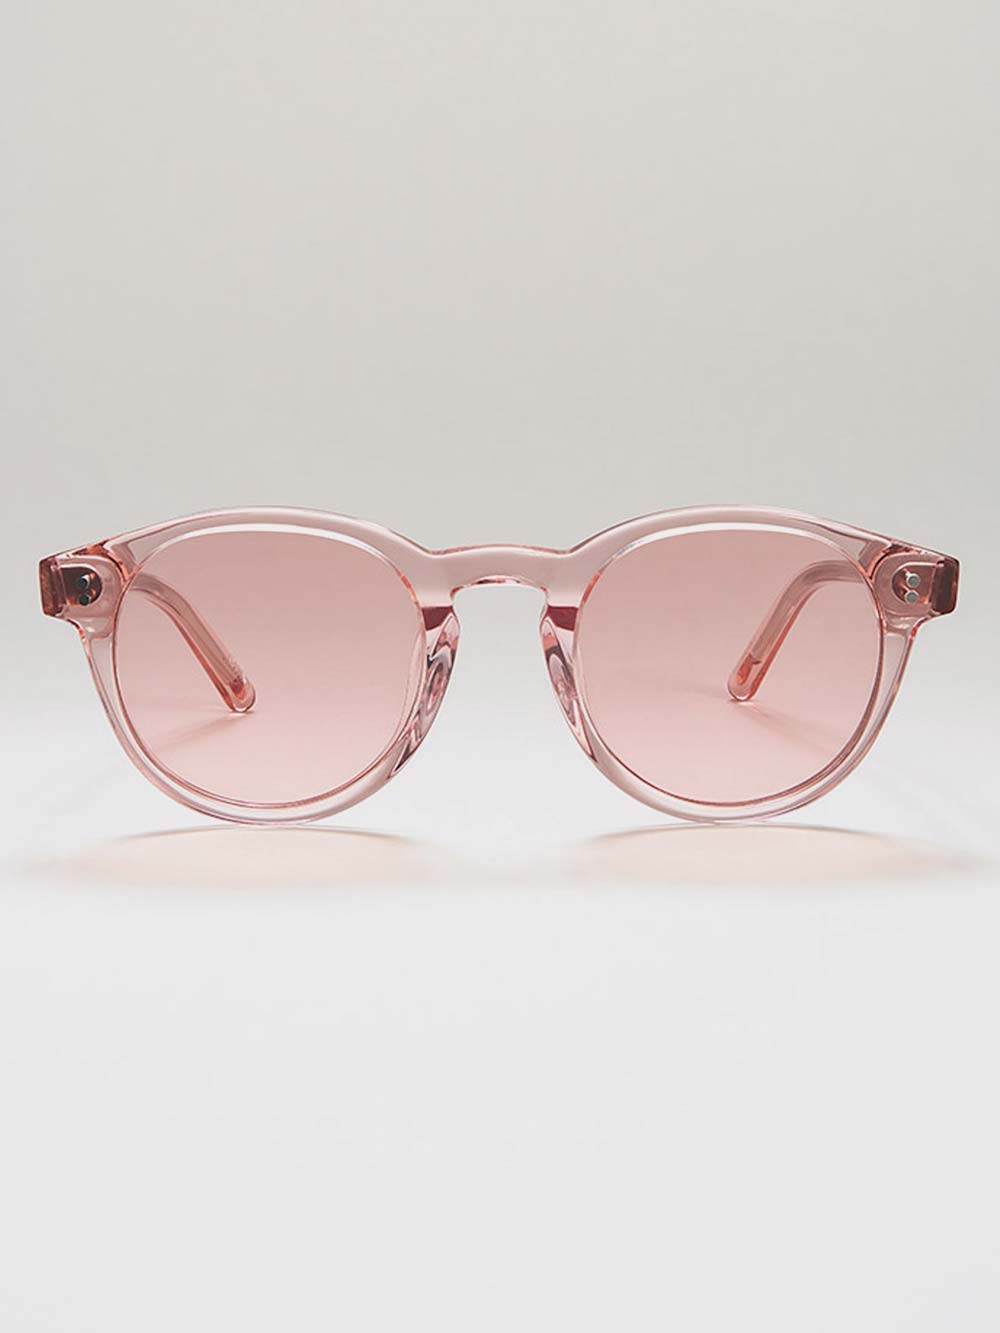 Chimi Pink 003 Sunglasses